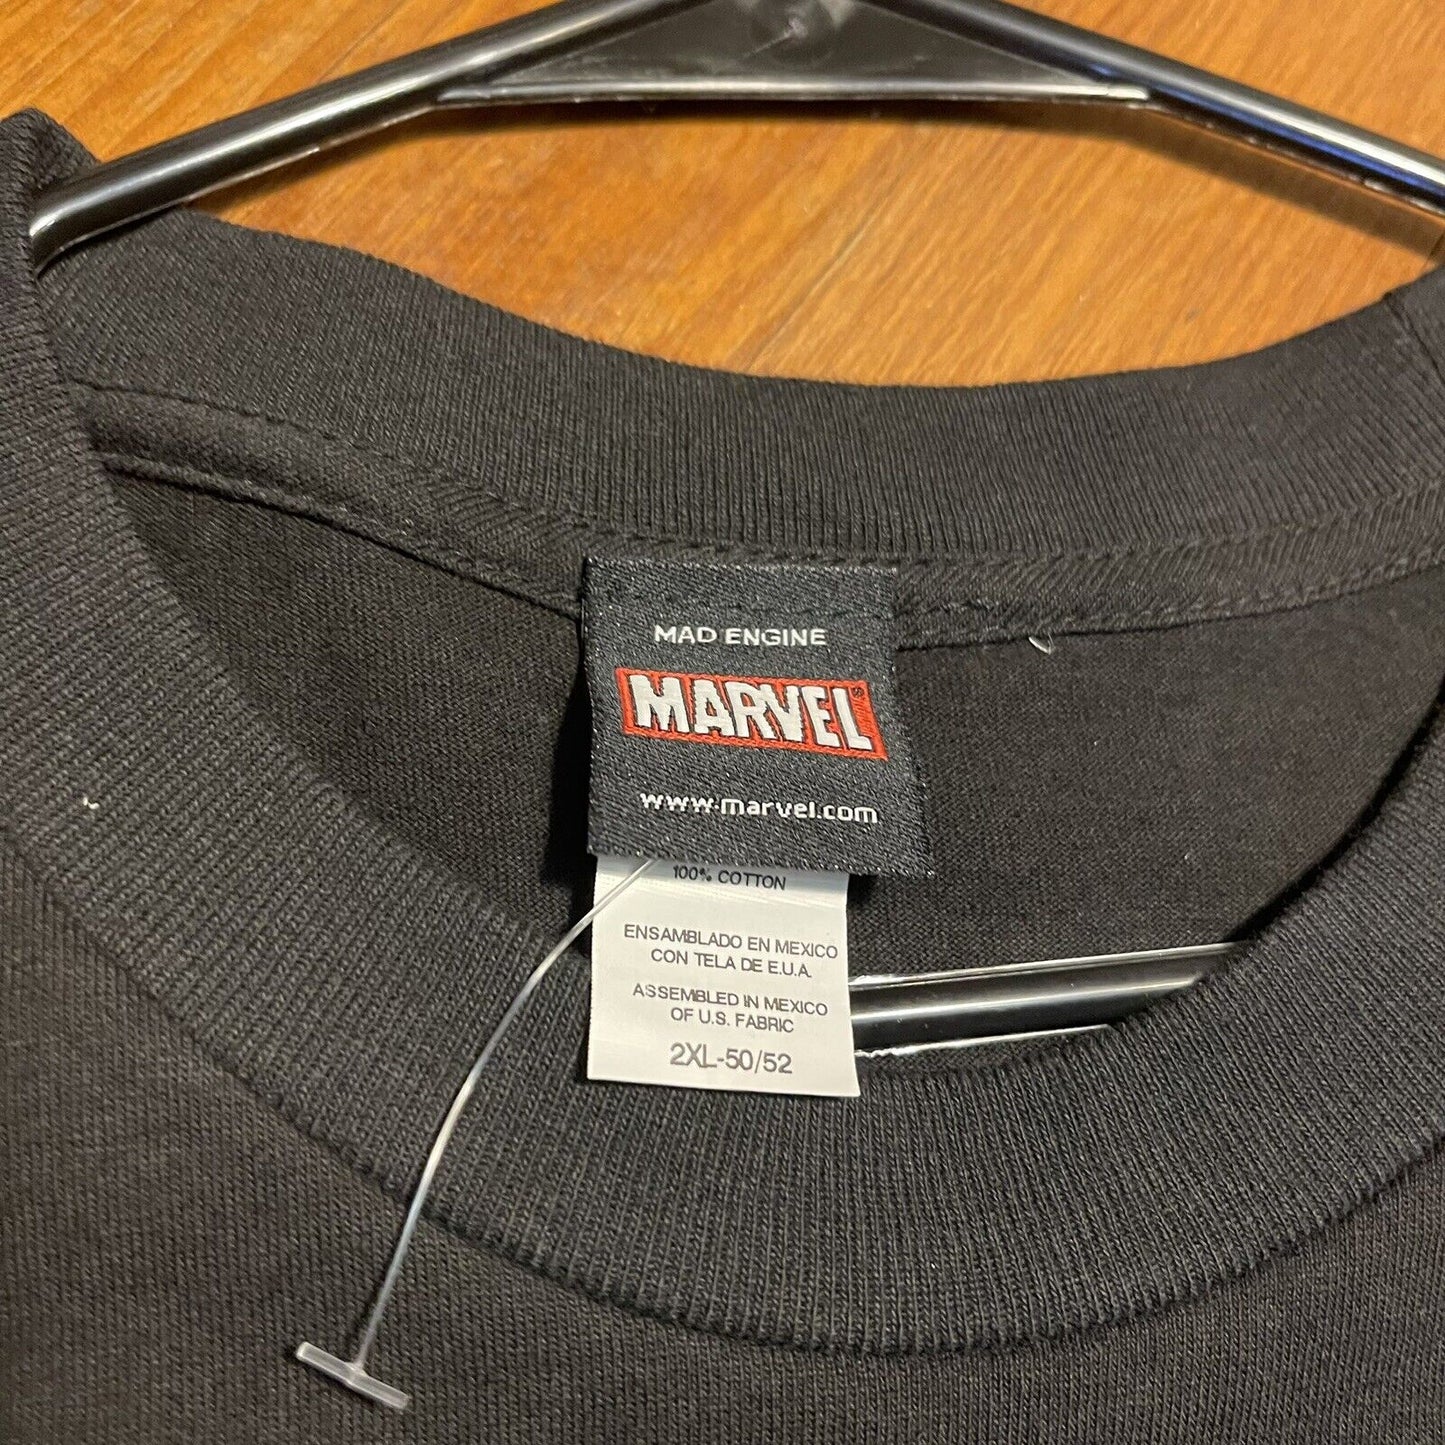 Vintage Marvel Mad Engine Shirt Size Xxl